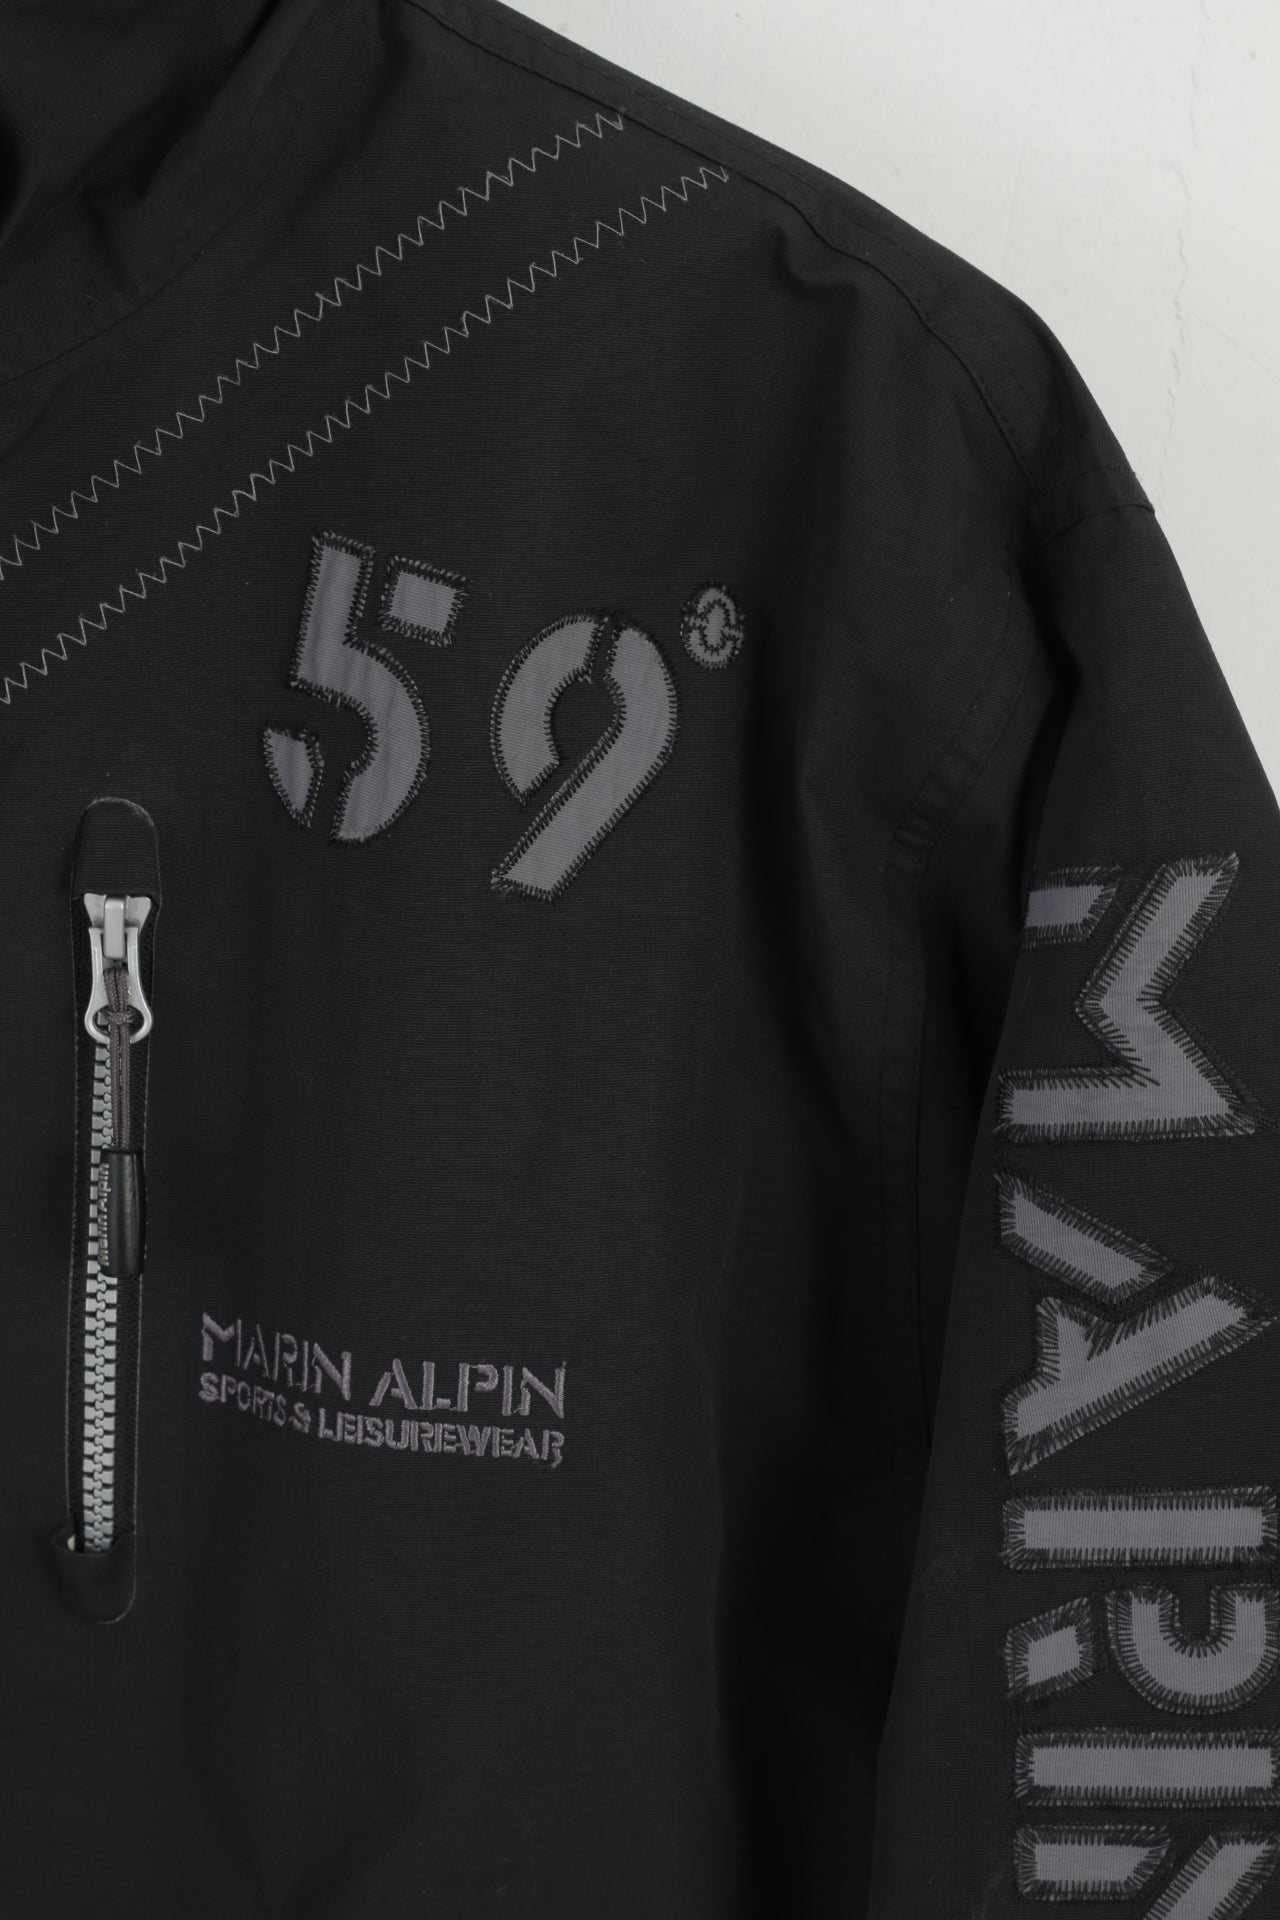 Marin Alpin Sports & Leisurewear Men M Jacket Black Nylon Waterproof Lightweight Top